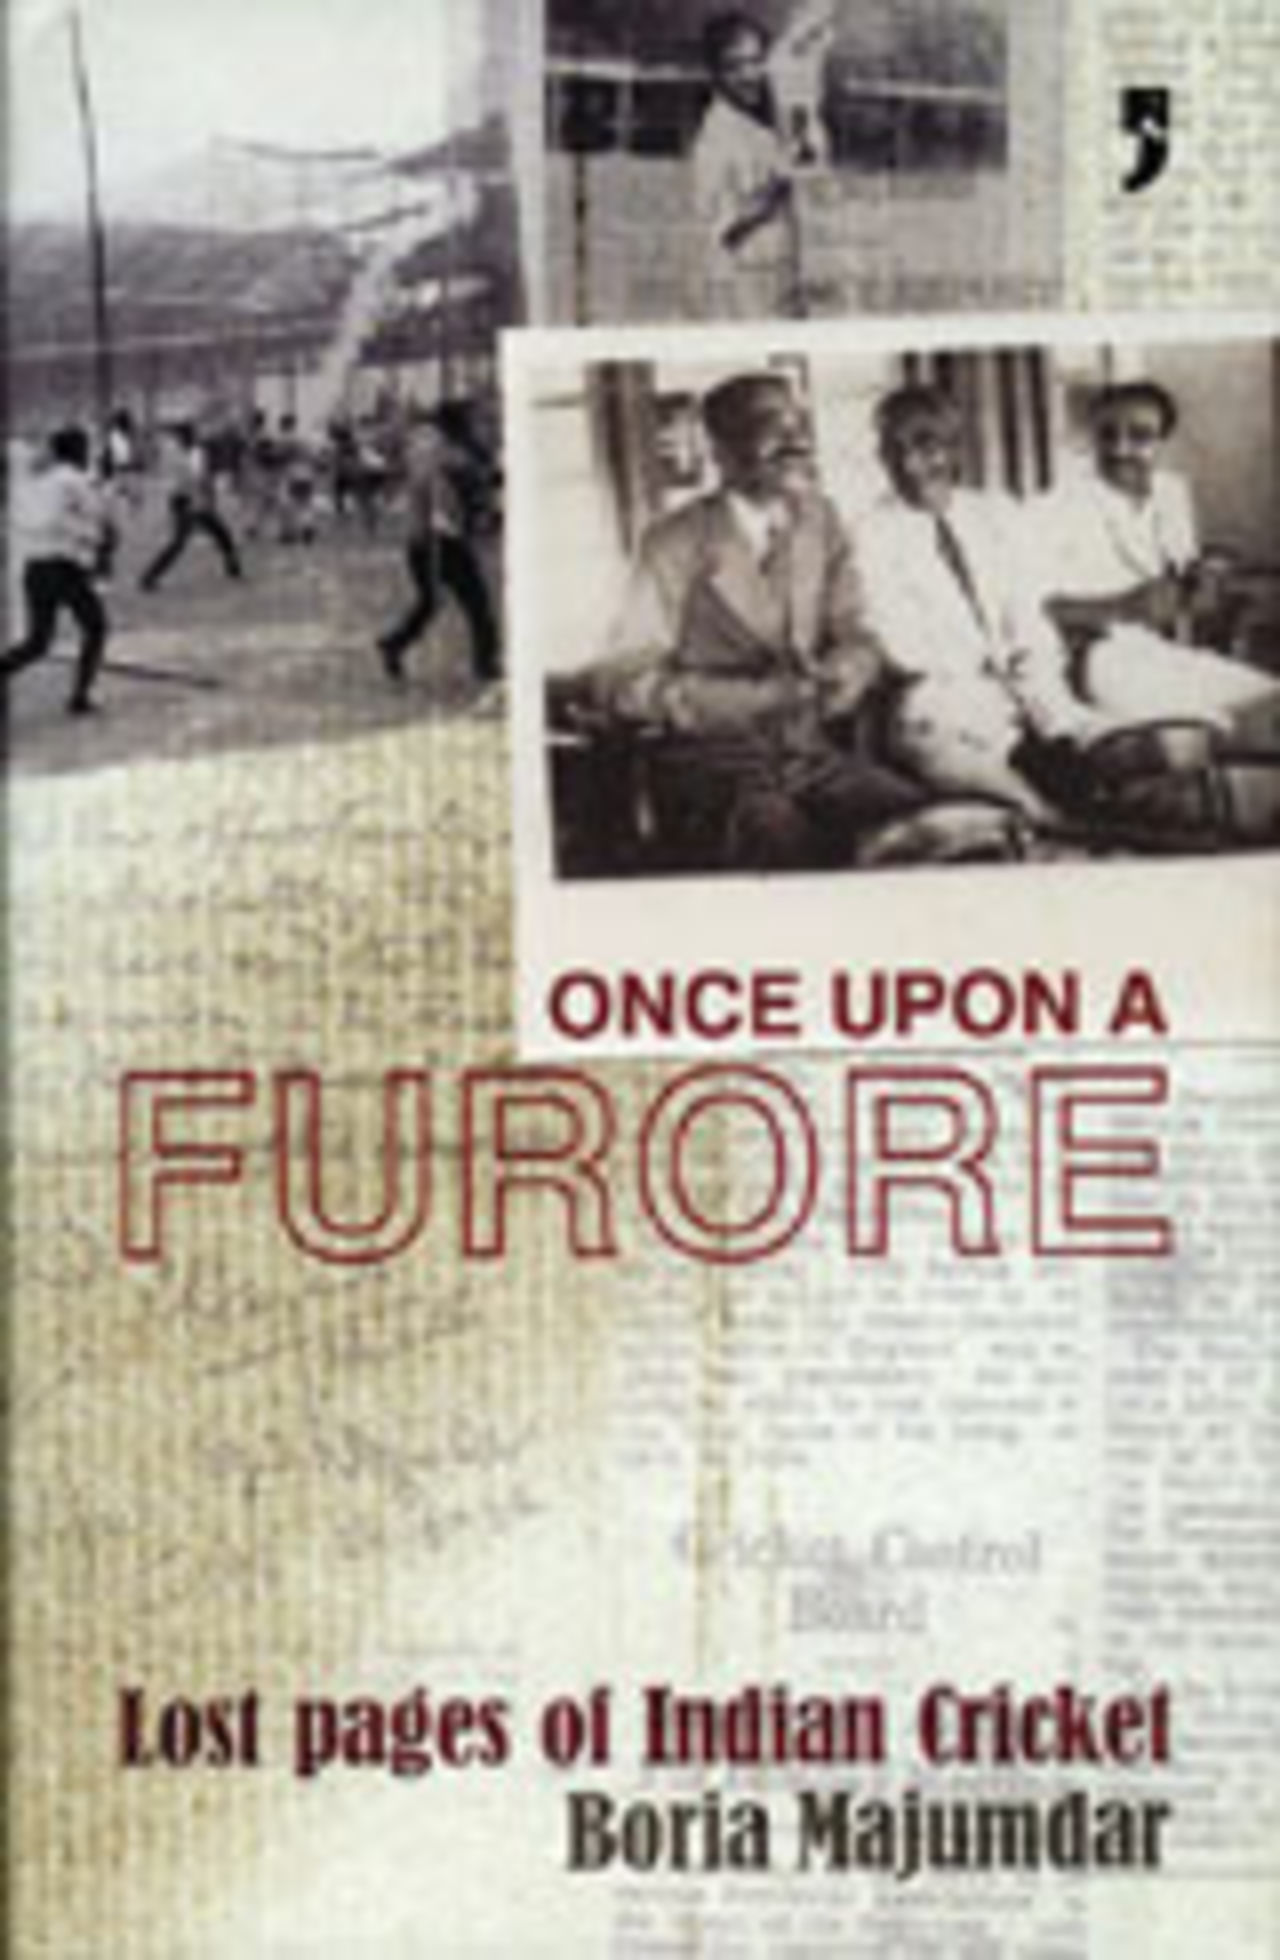 'Once Upon a Furore' - Boria Majumdar, August 24 2004